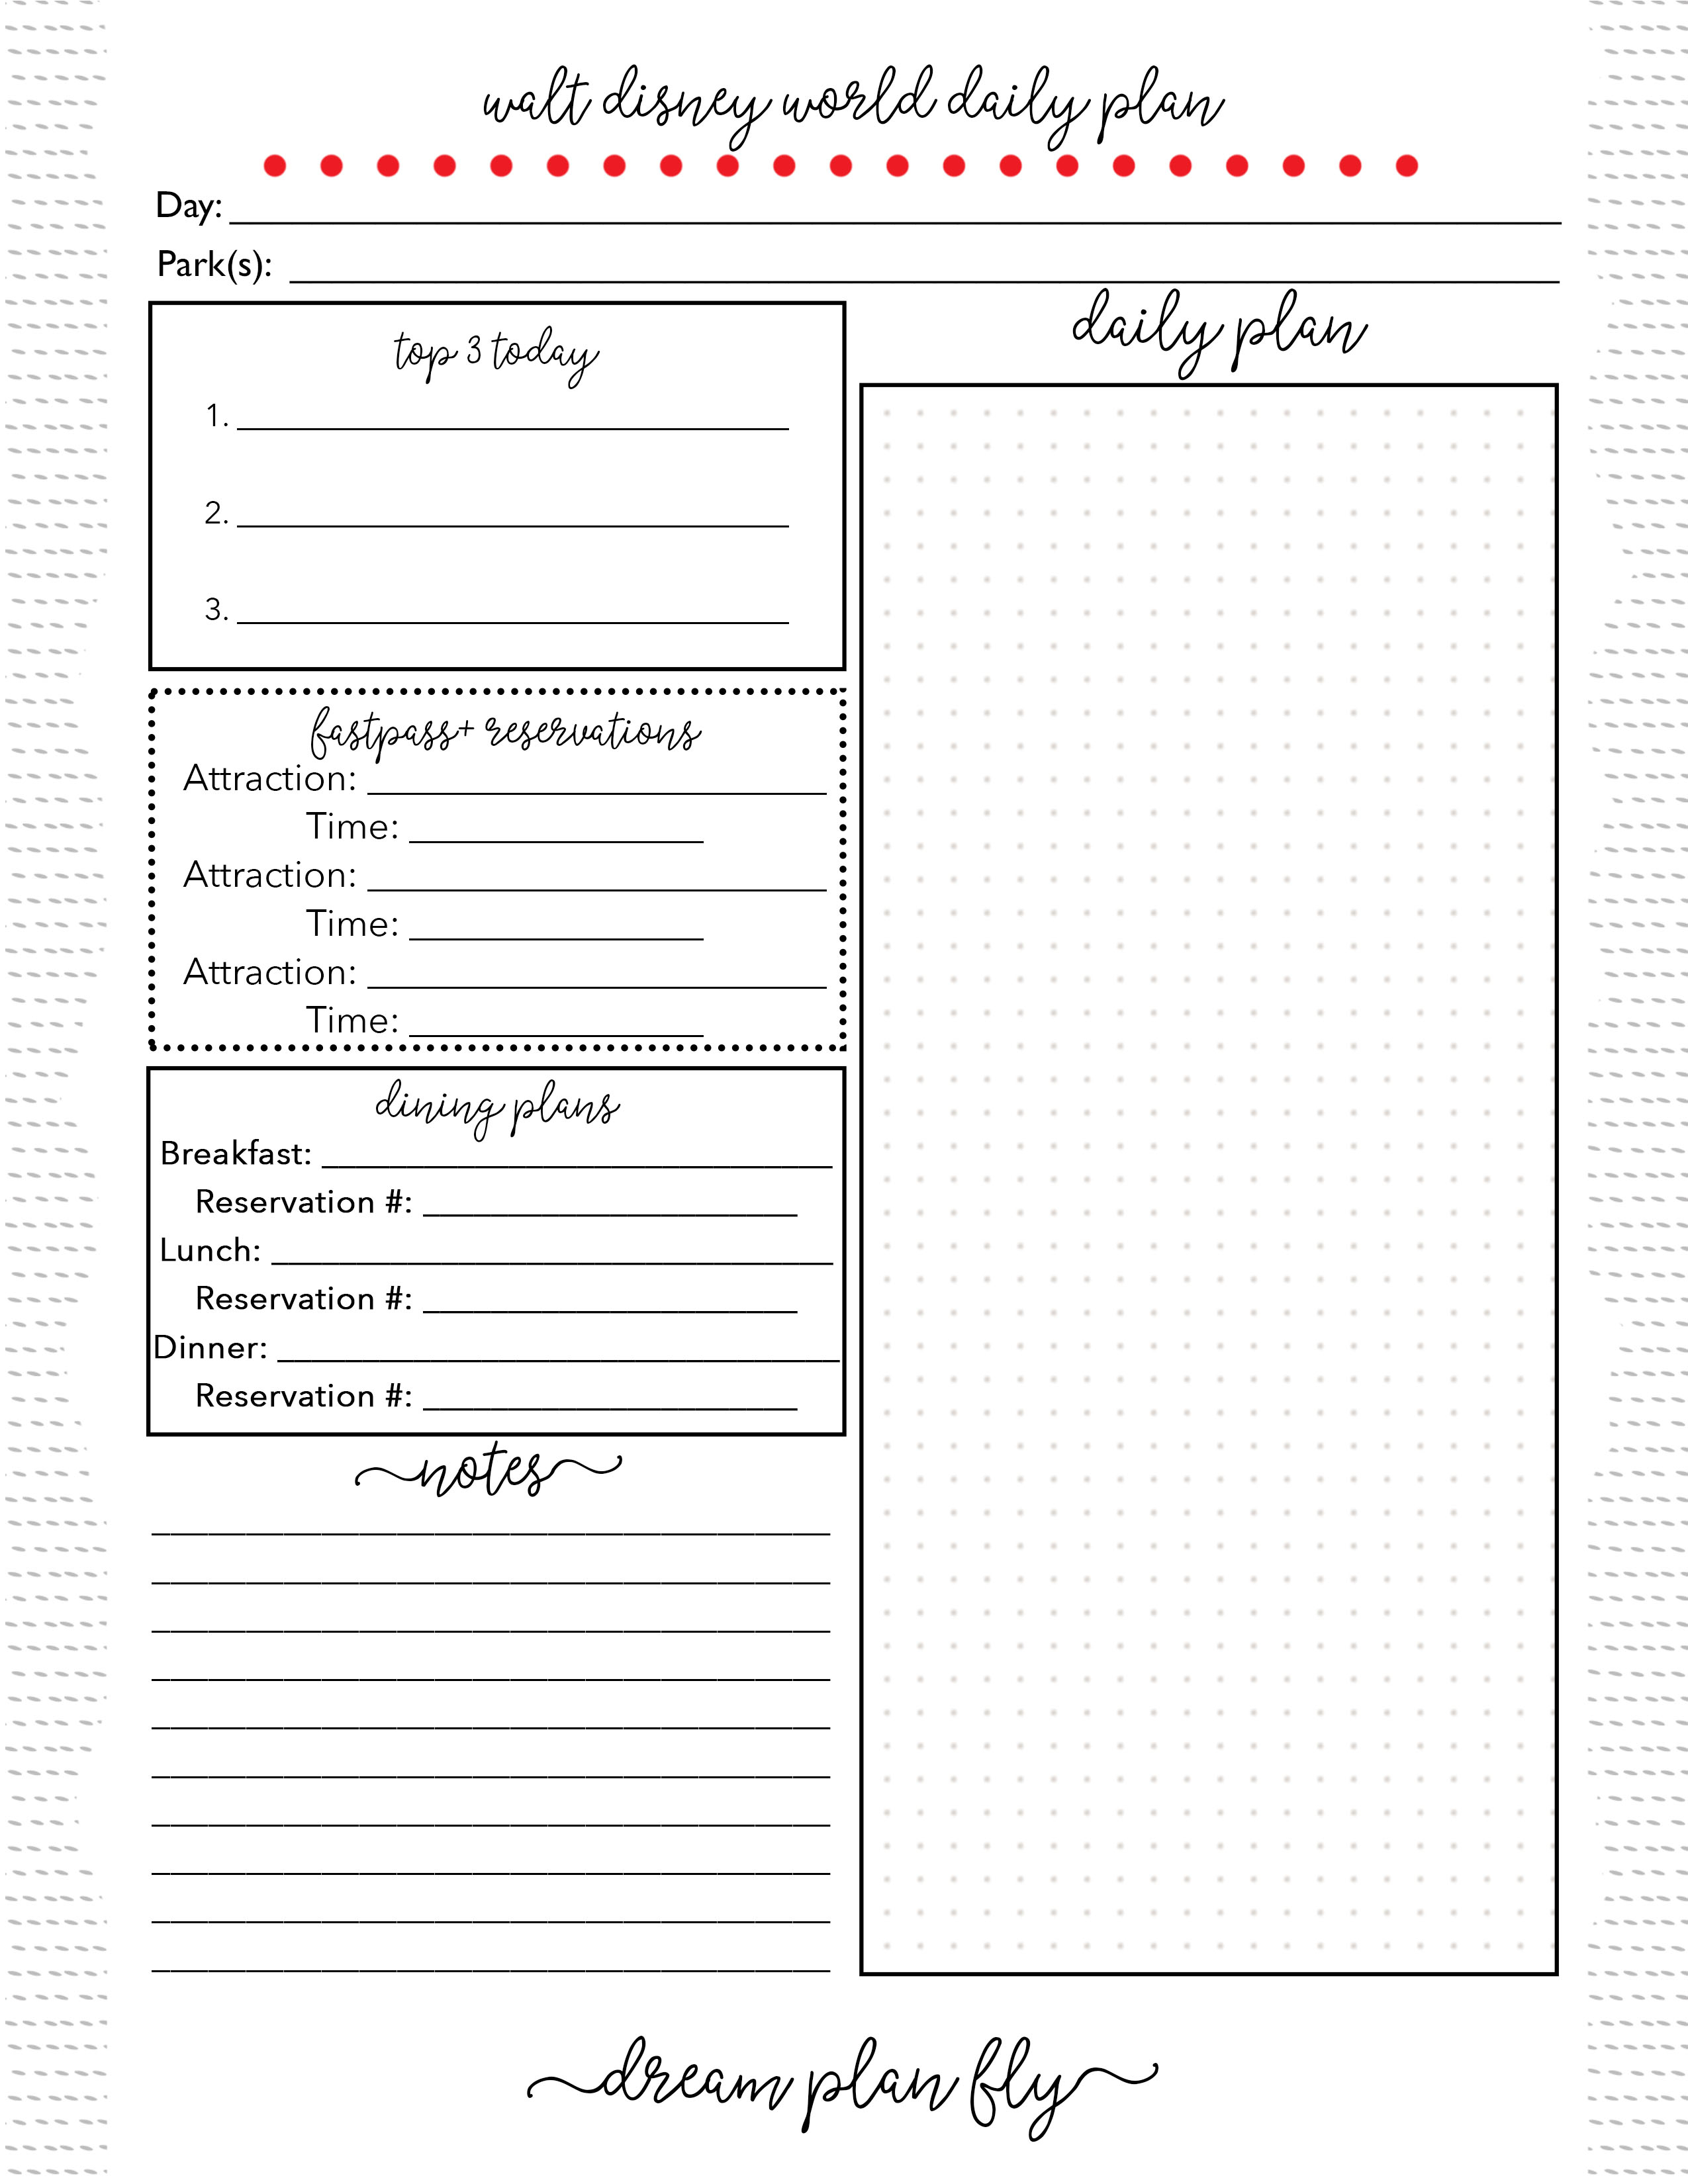 Free Printable Daily Planner For Walt Disney World - Dream